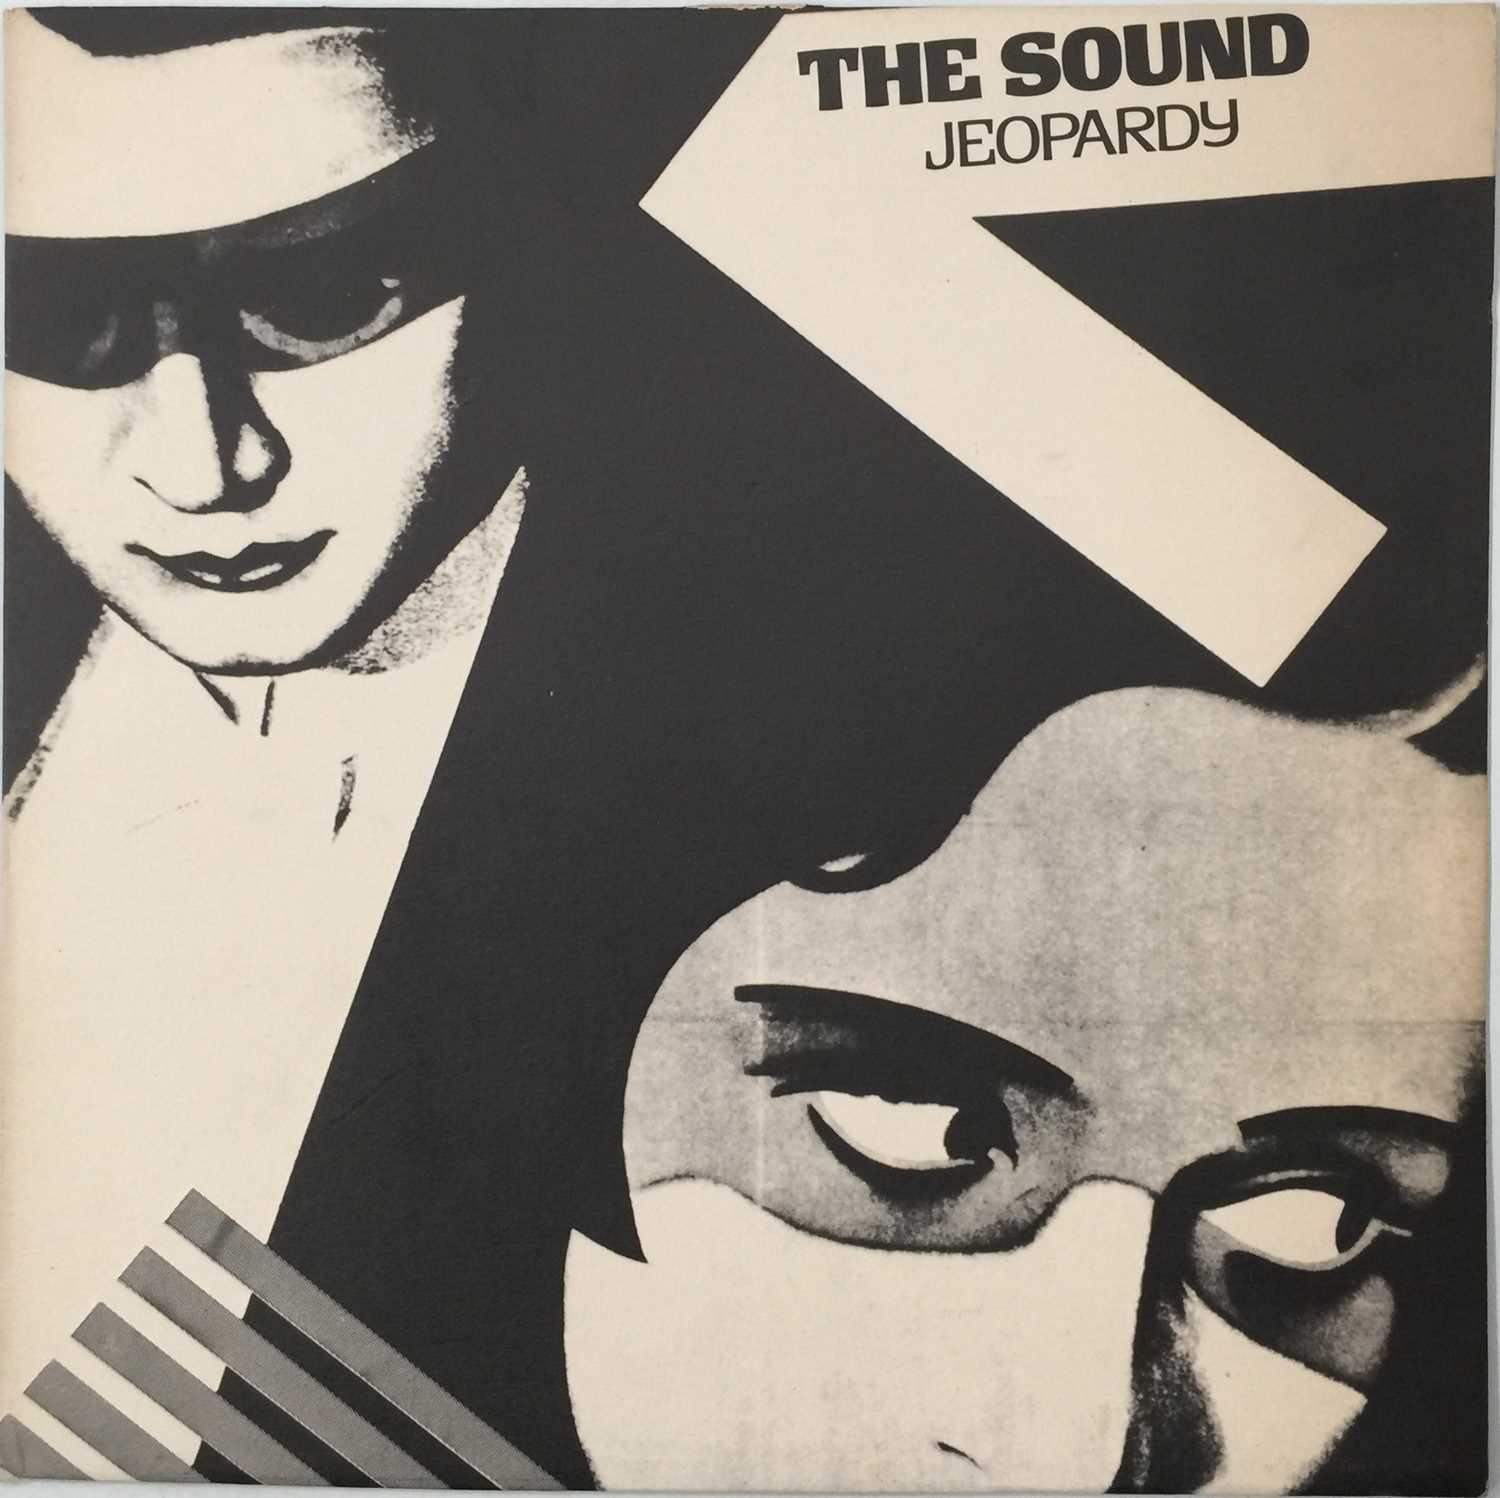 THE SOUND - JEOPARDY LP (ORIGINAL UK RELEASE - KOROVA KODE 2) - Image 2 of 5